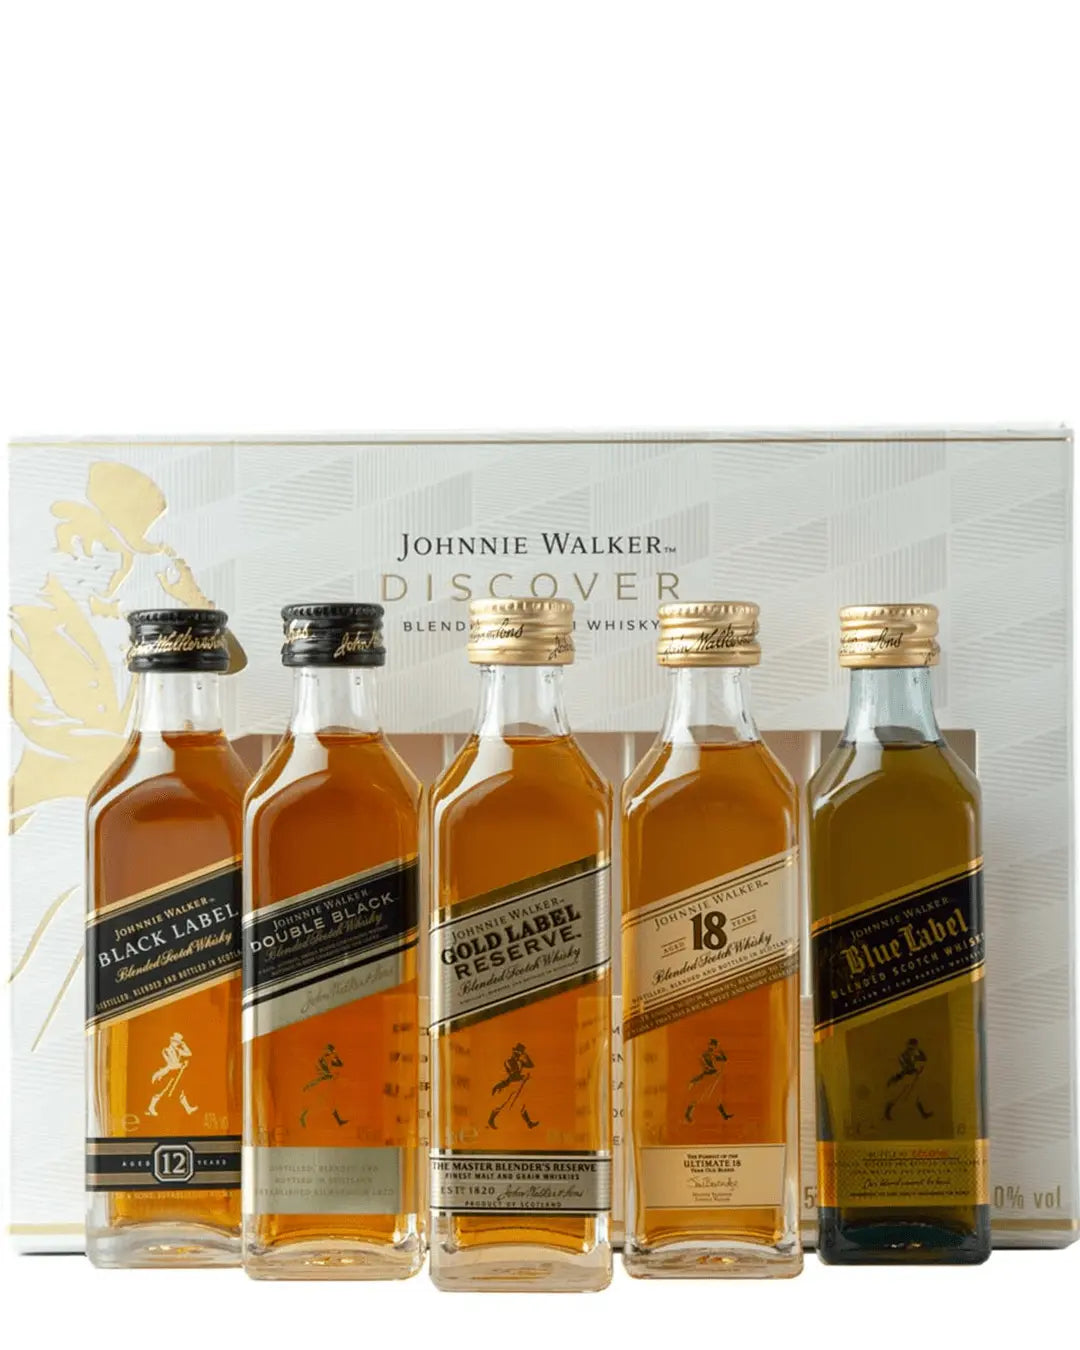 Johnnie Walker Discover Whisky Miniature Gift Set, 5 x 5 cl Spirit Miniatures